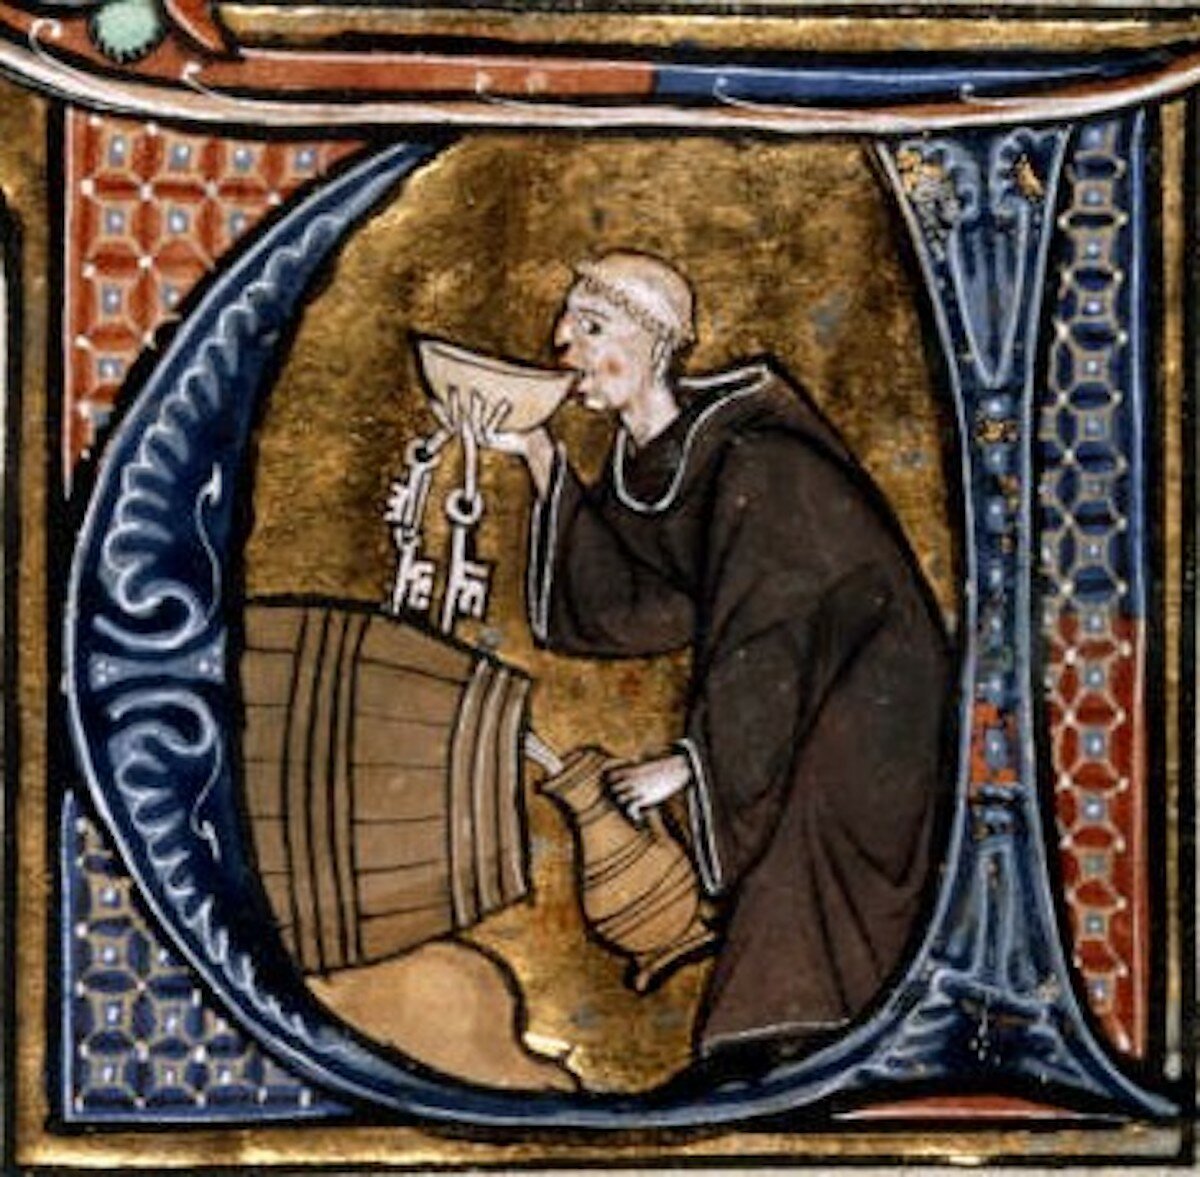 medieval monk tasting alcohol